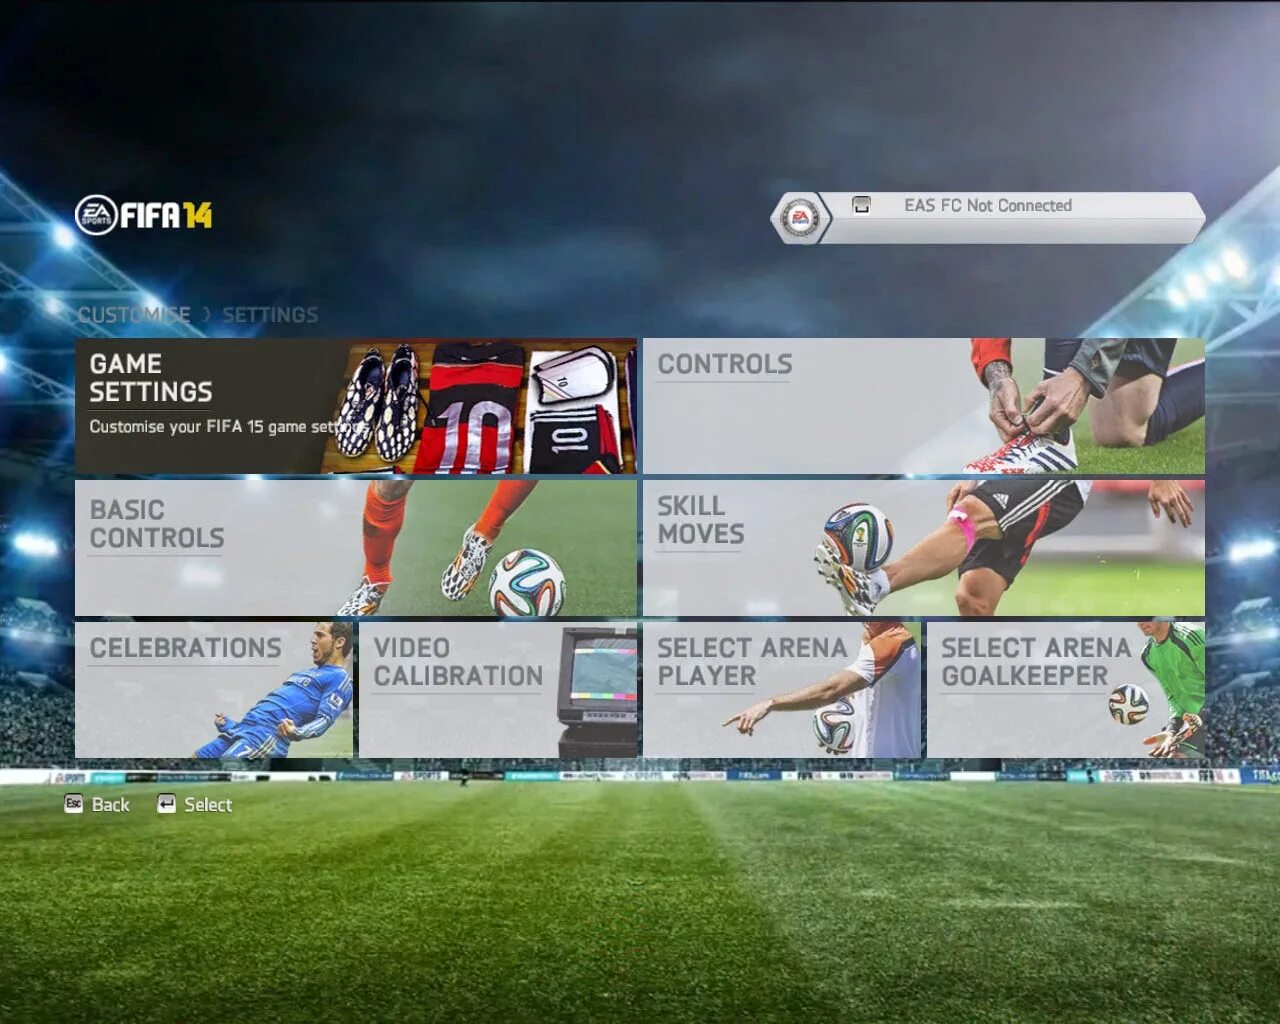 Fifa tools. FIFA 14 главное меню. Патчи для ФИФА 14. FIFA 14 турецкая лига. FIFA 14 cracks.